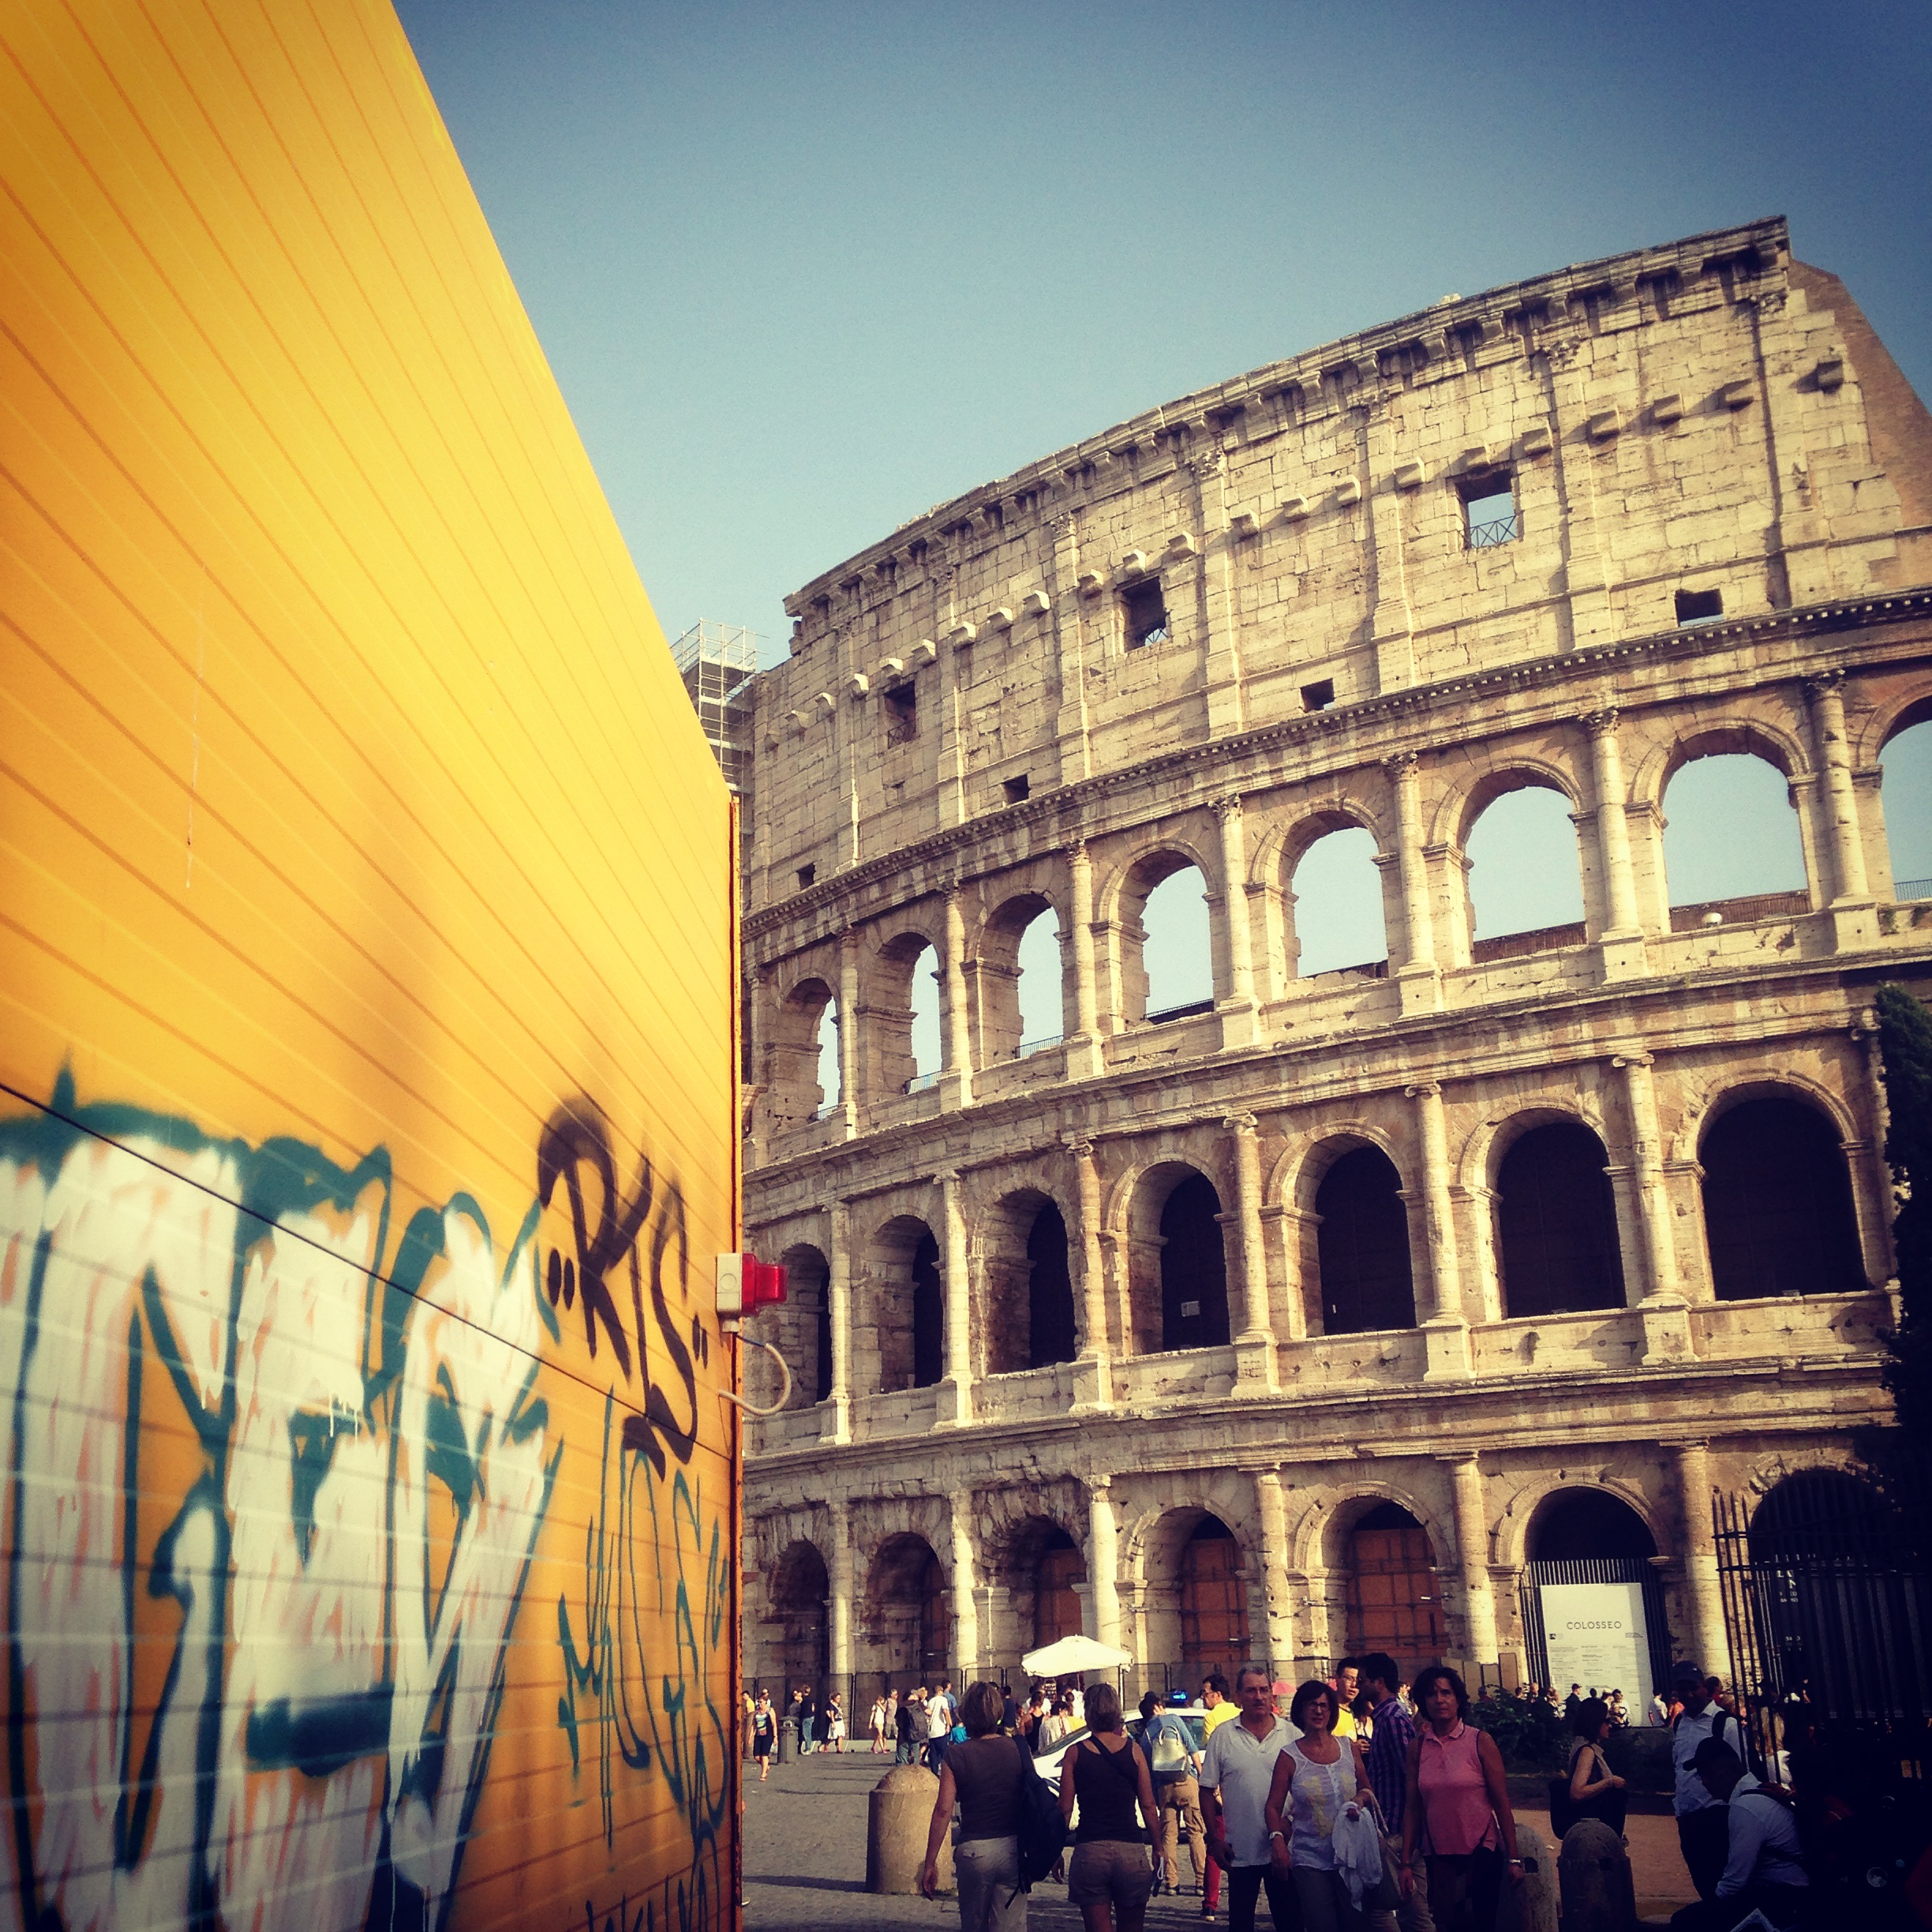 When in Rome…